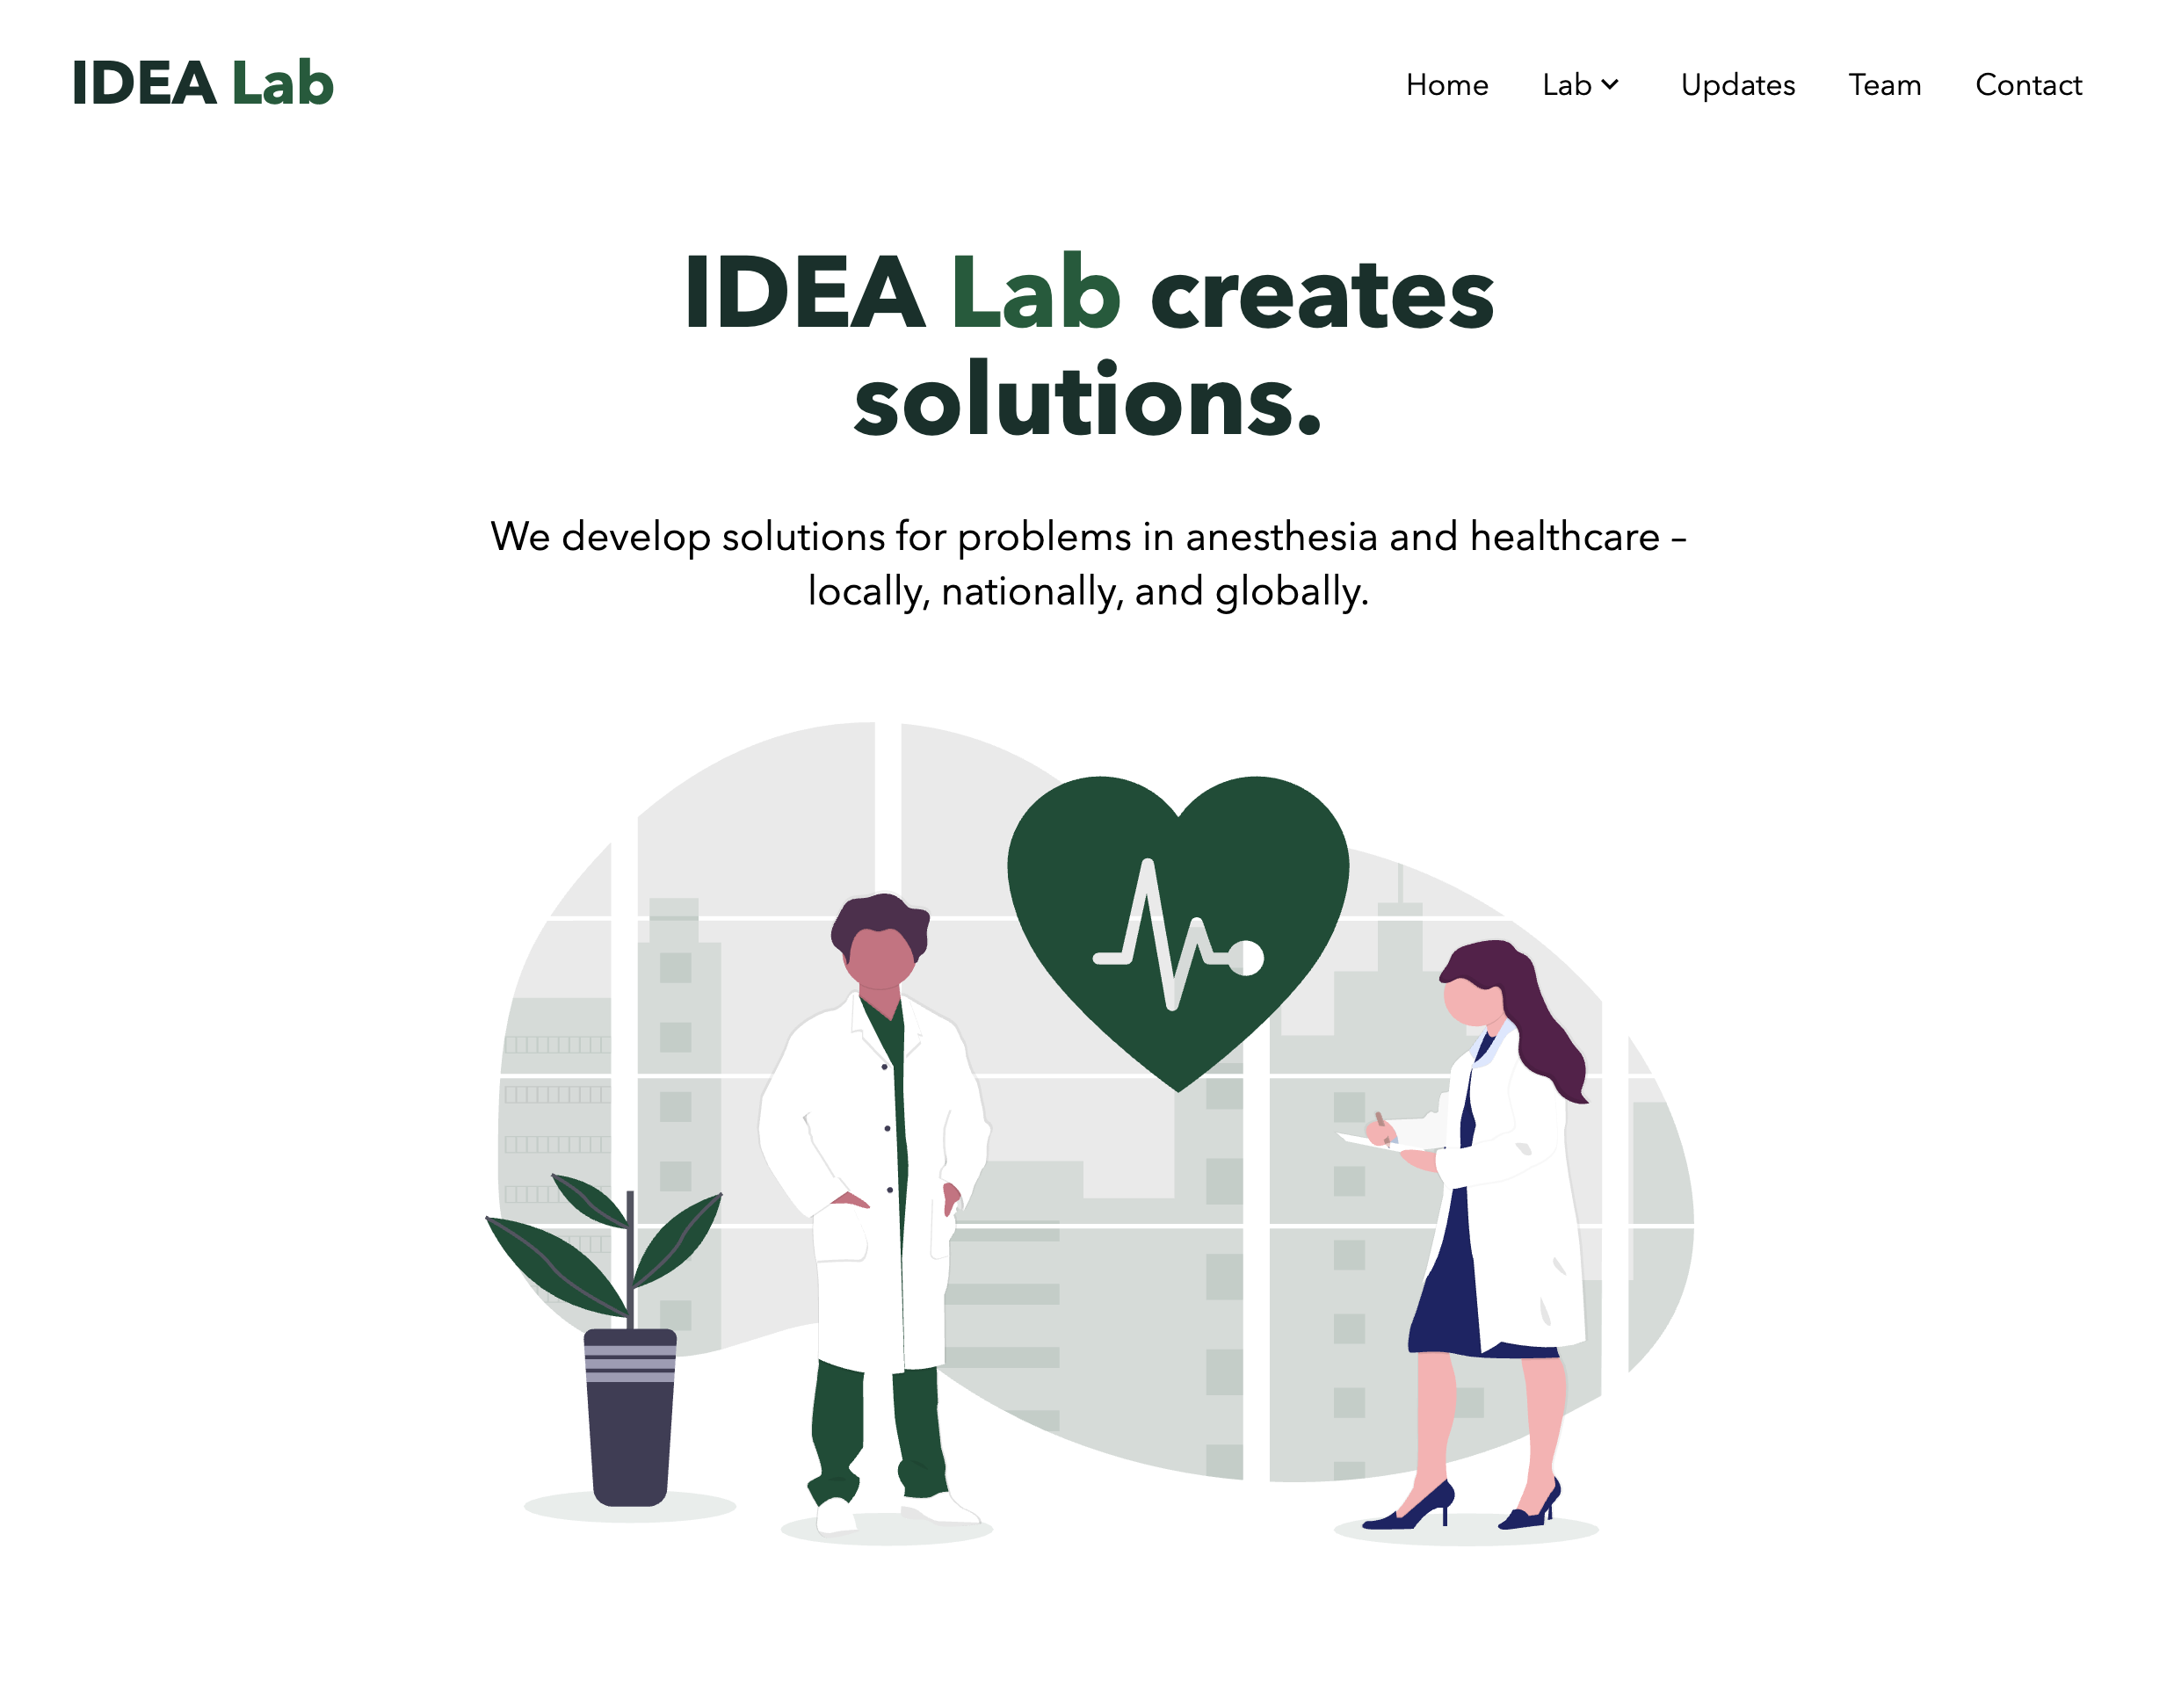 IDEA Lab